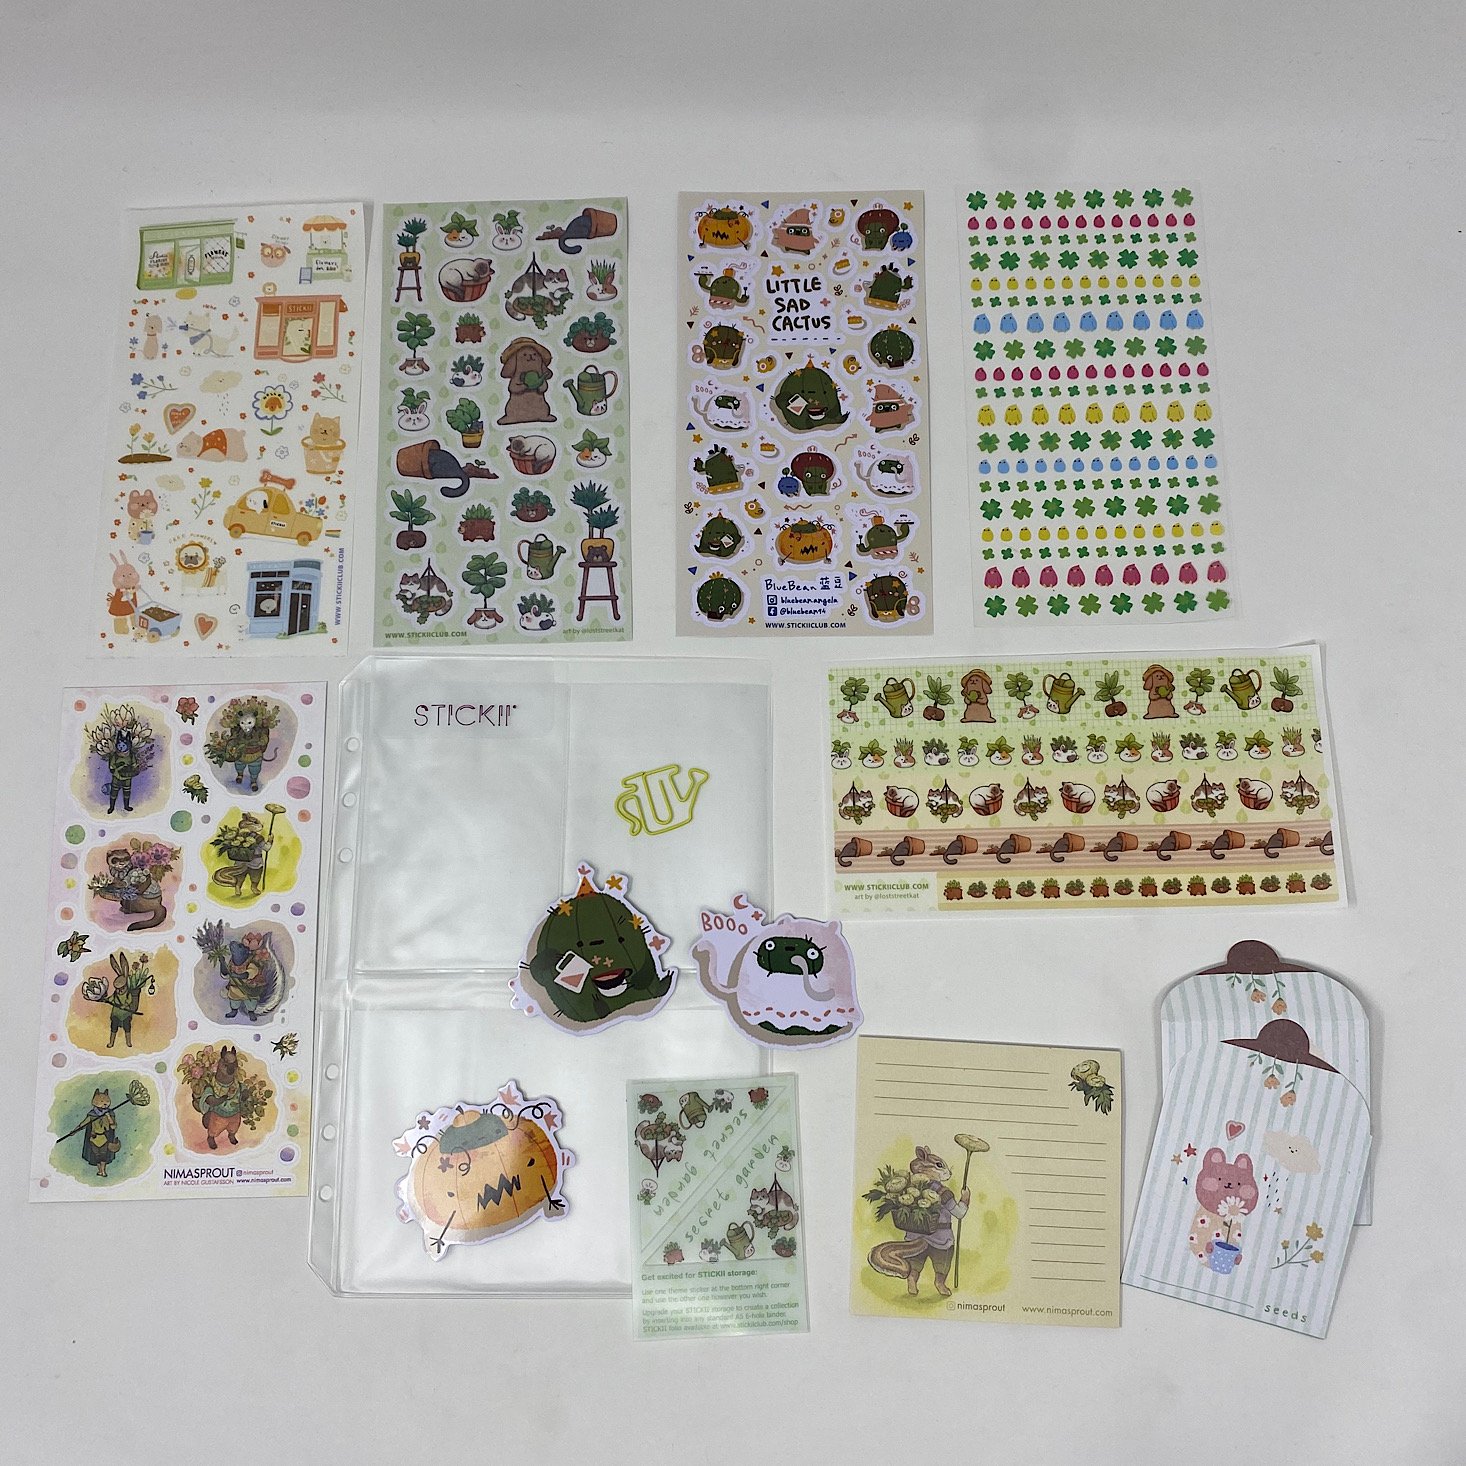 Stickii Sticker Cute Pack Review – October 2020